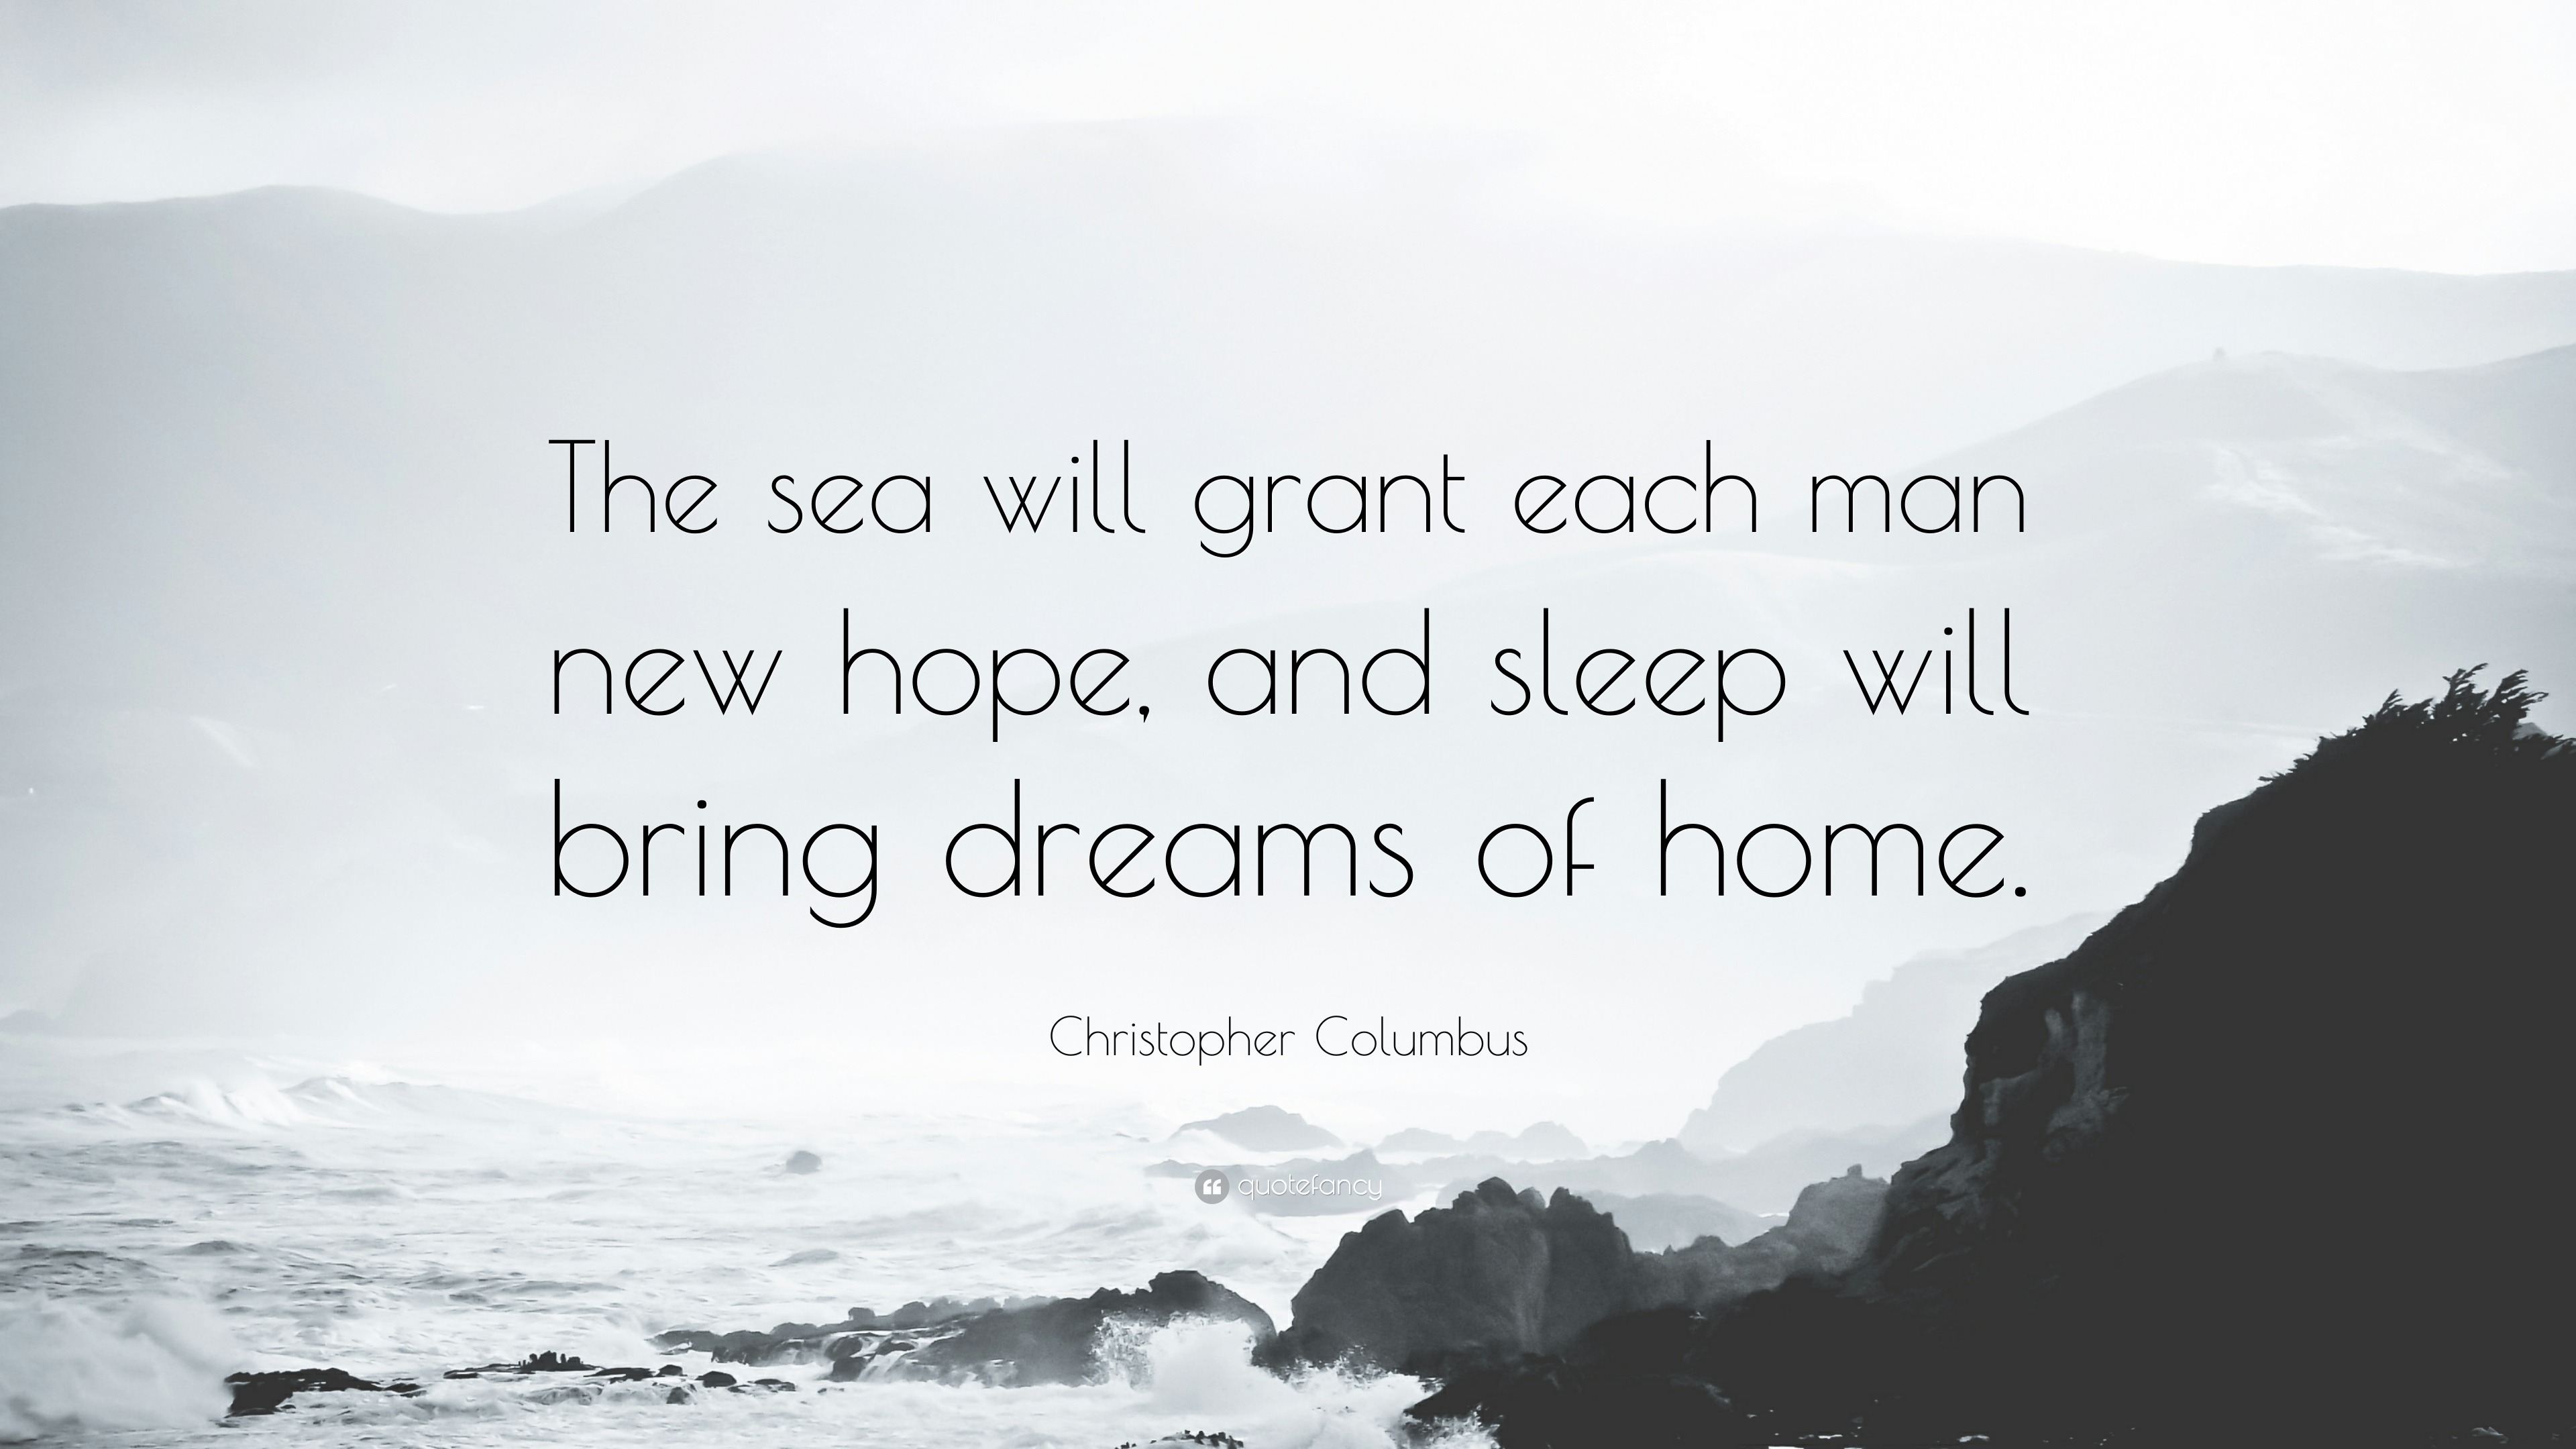 And the Sea Will Grant Each Man New Hope, As Sleep Brings Dreams